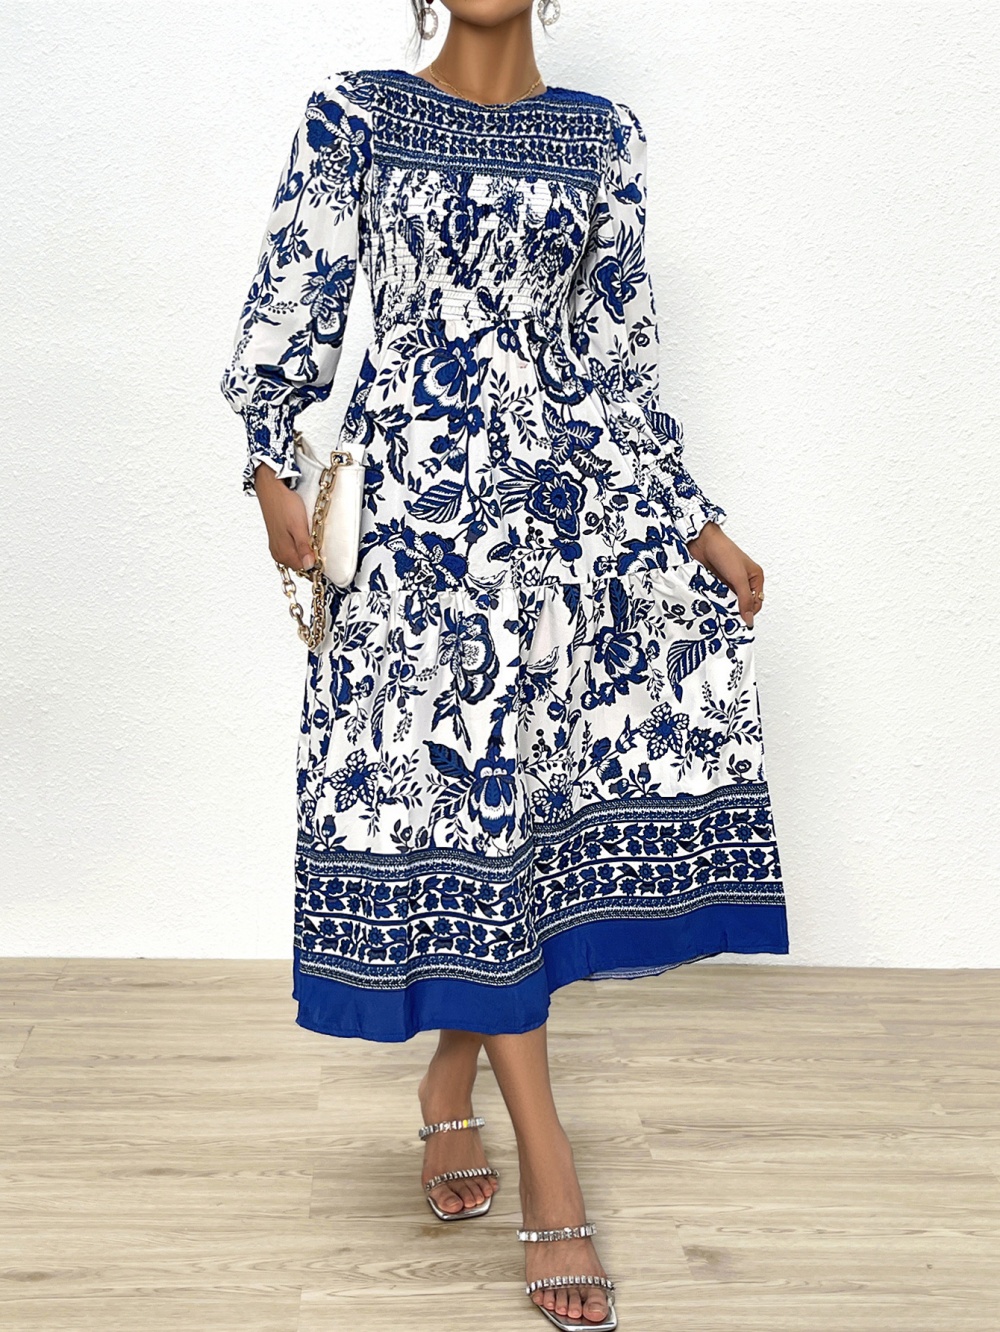 European style Casual long sleeve printing dress